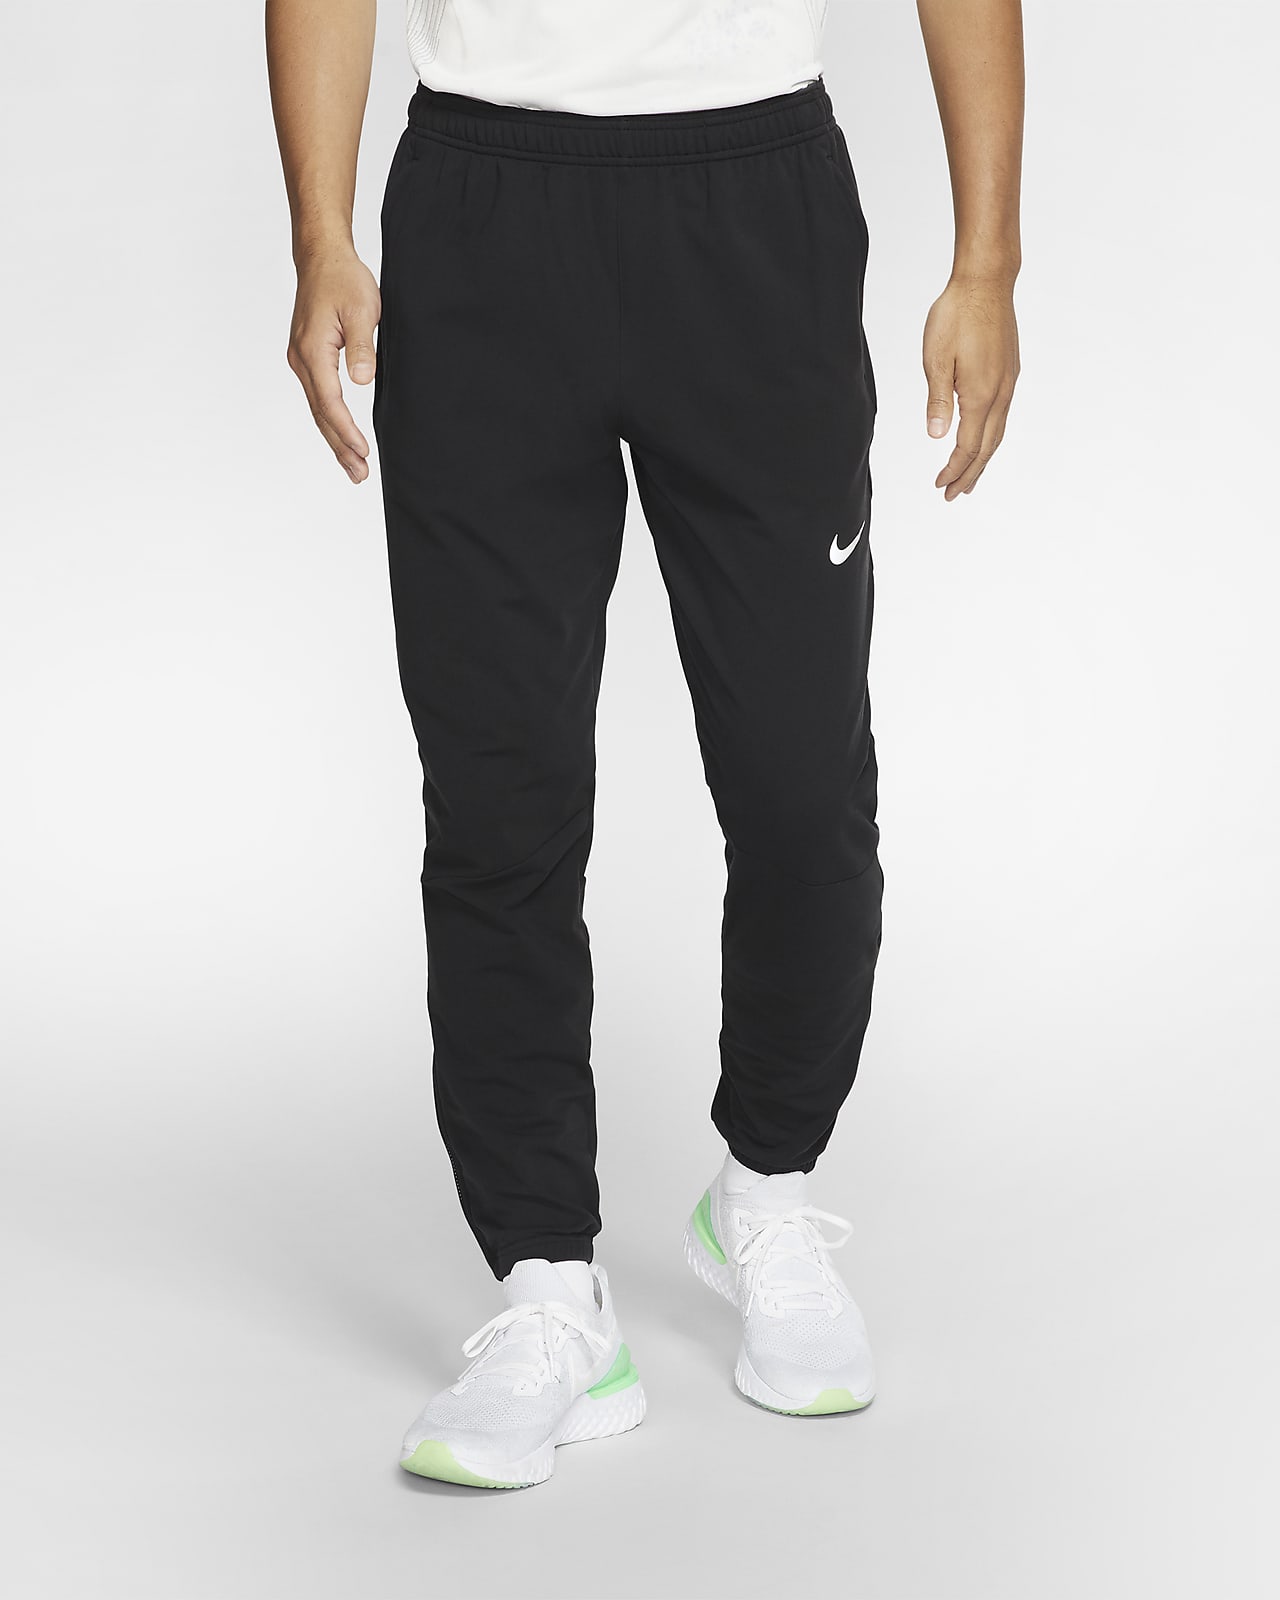 Running Trousers. Nike FI